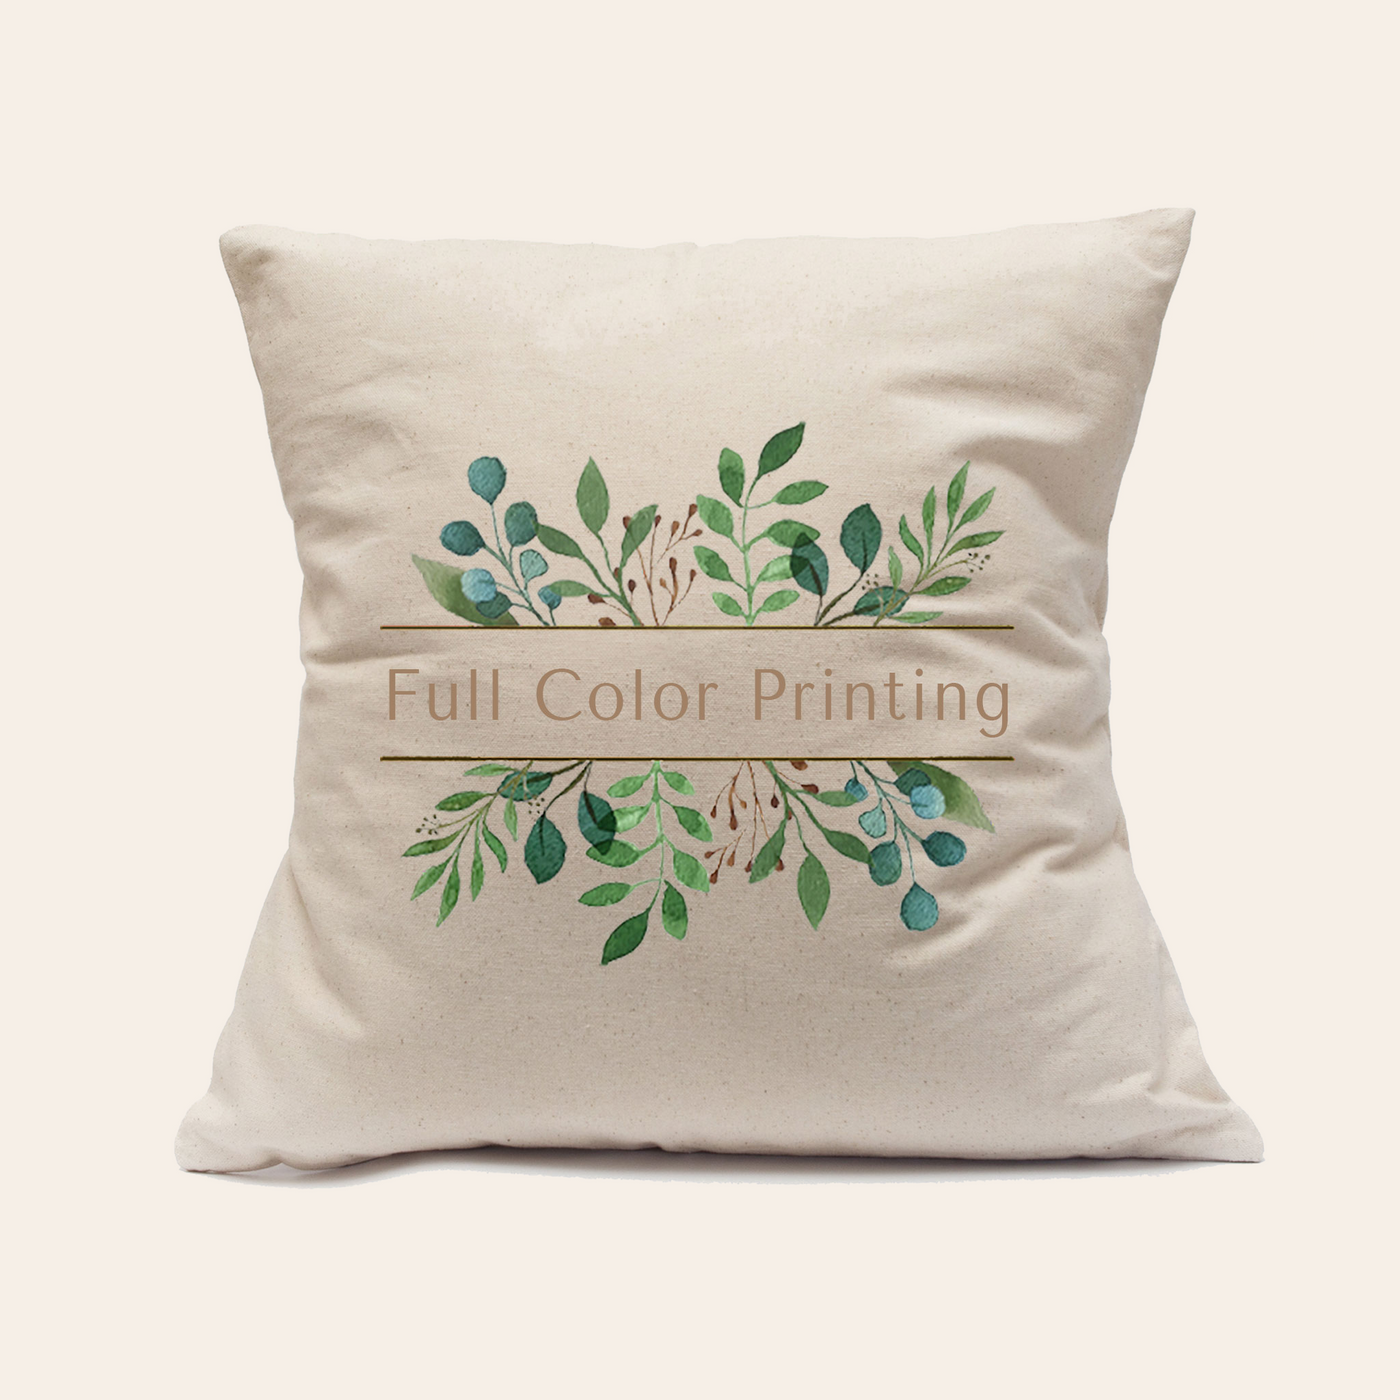 Natural Cotton Canvas Pillow Cover 18"x18"